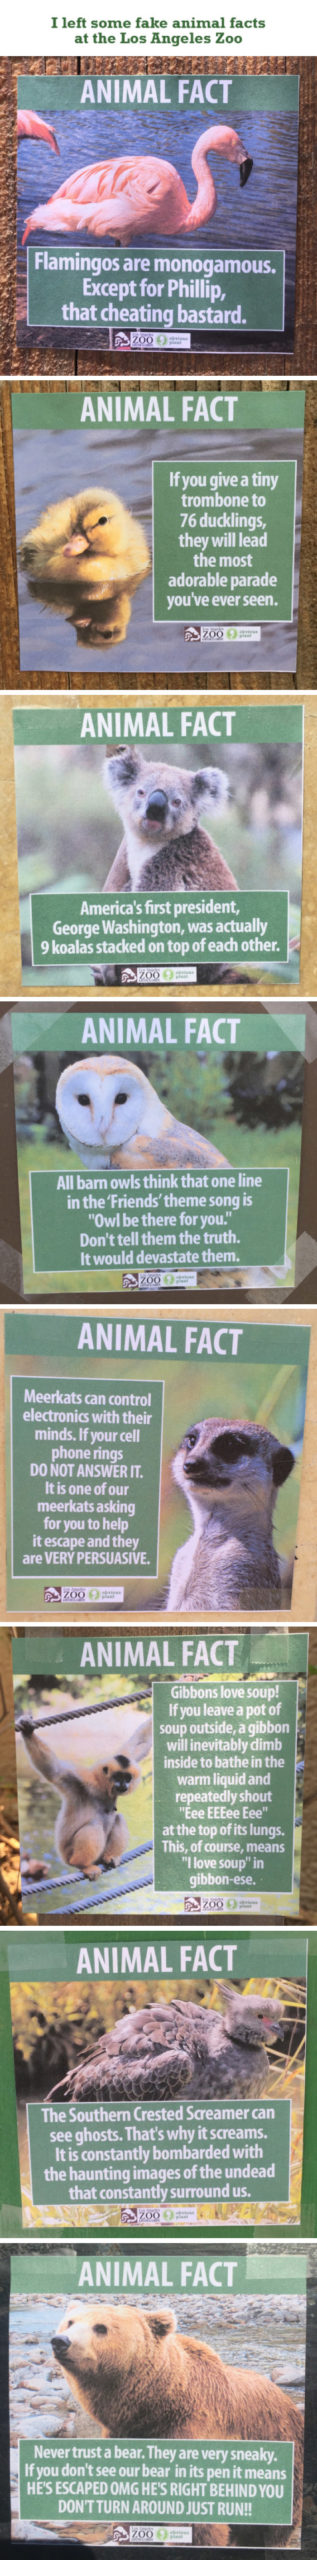 Animal+Facts